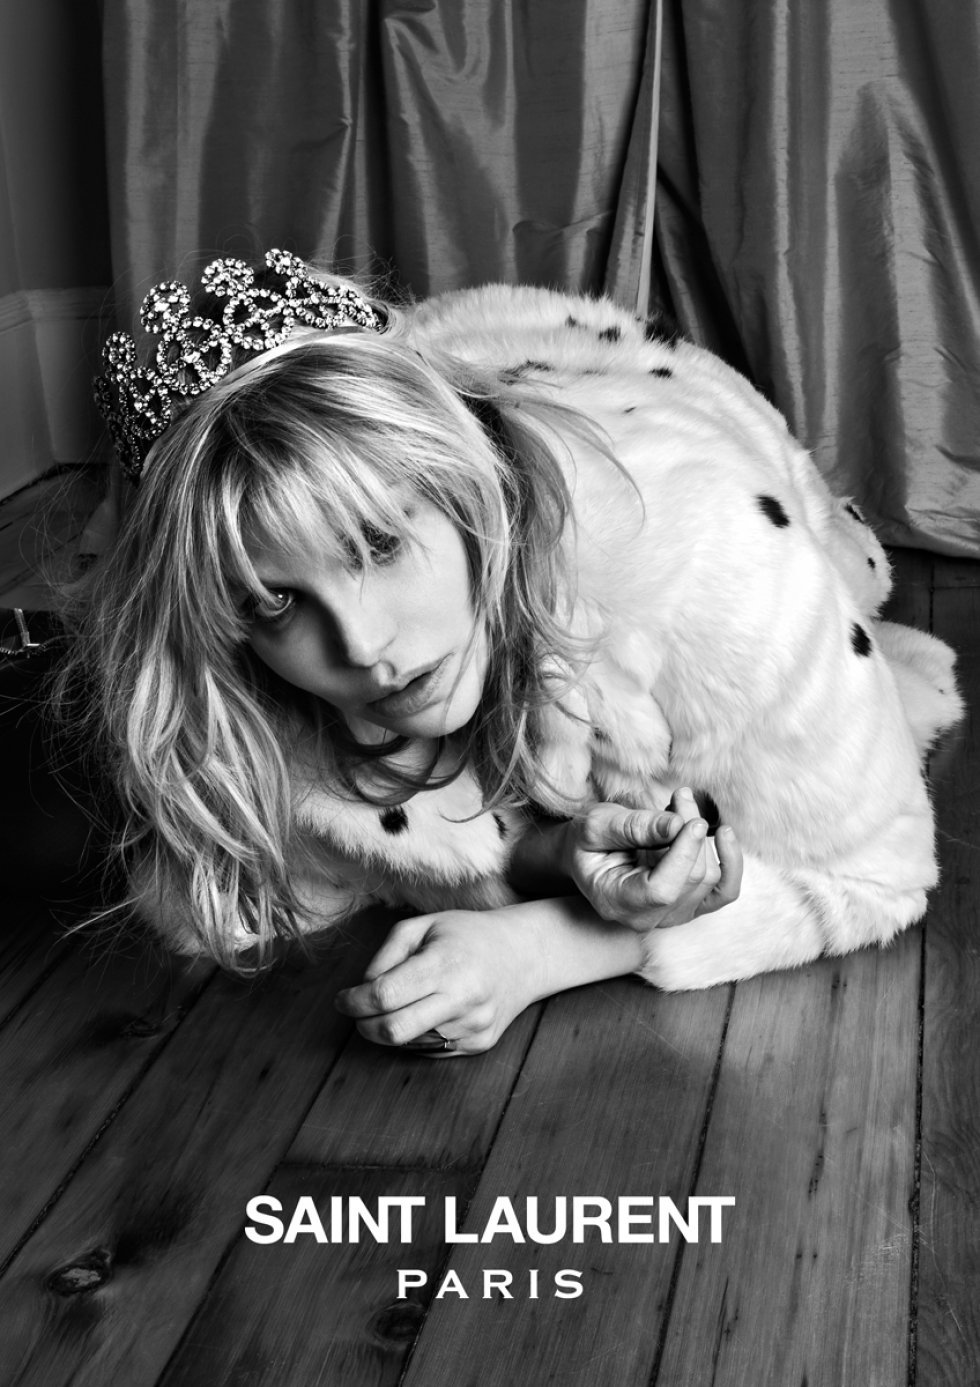 Courtney Love iført en sort og hvid herre-pels fra det seneste vinter 14 show - Pressefoto: Saint Laurent - Yves Saint Laurent sammensmelter ikonisk mode og musik på ny